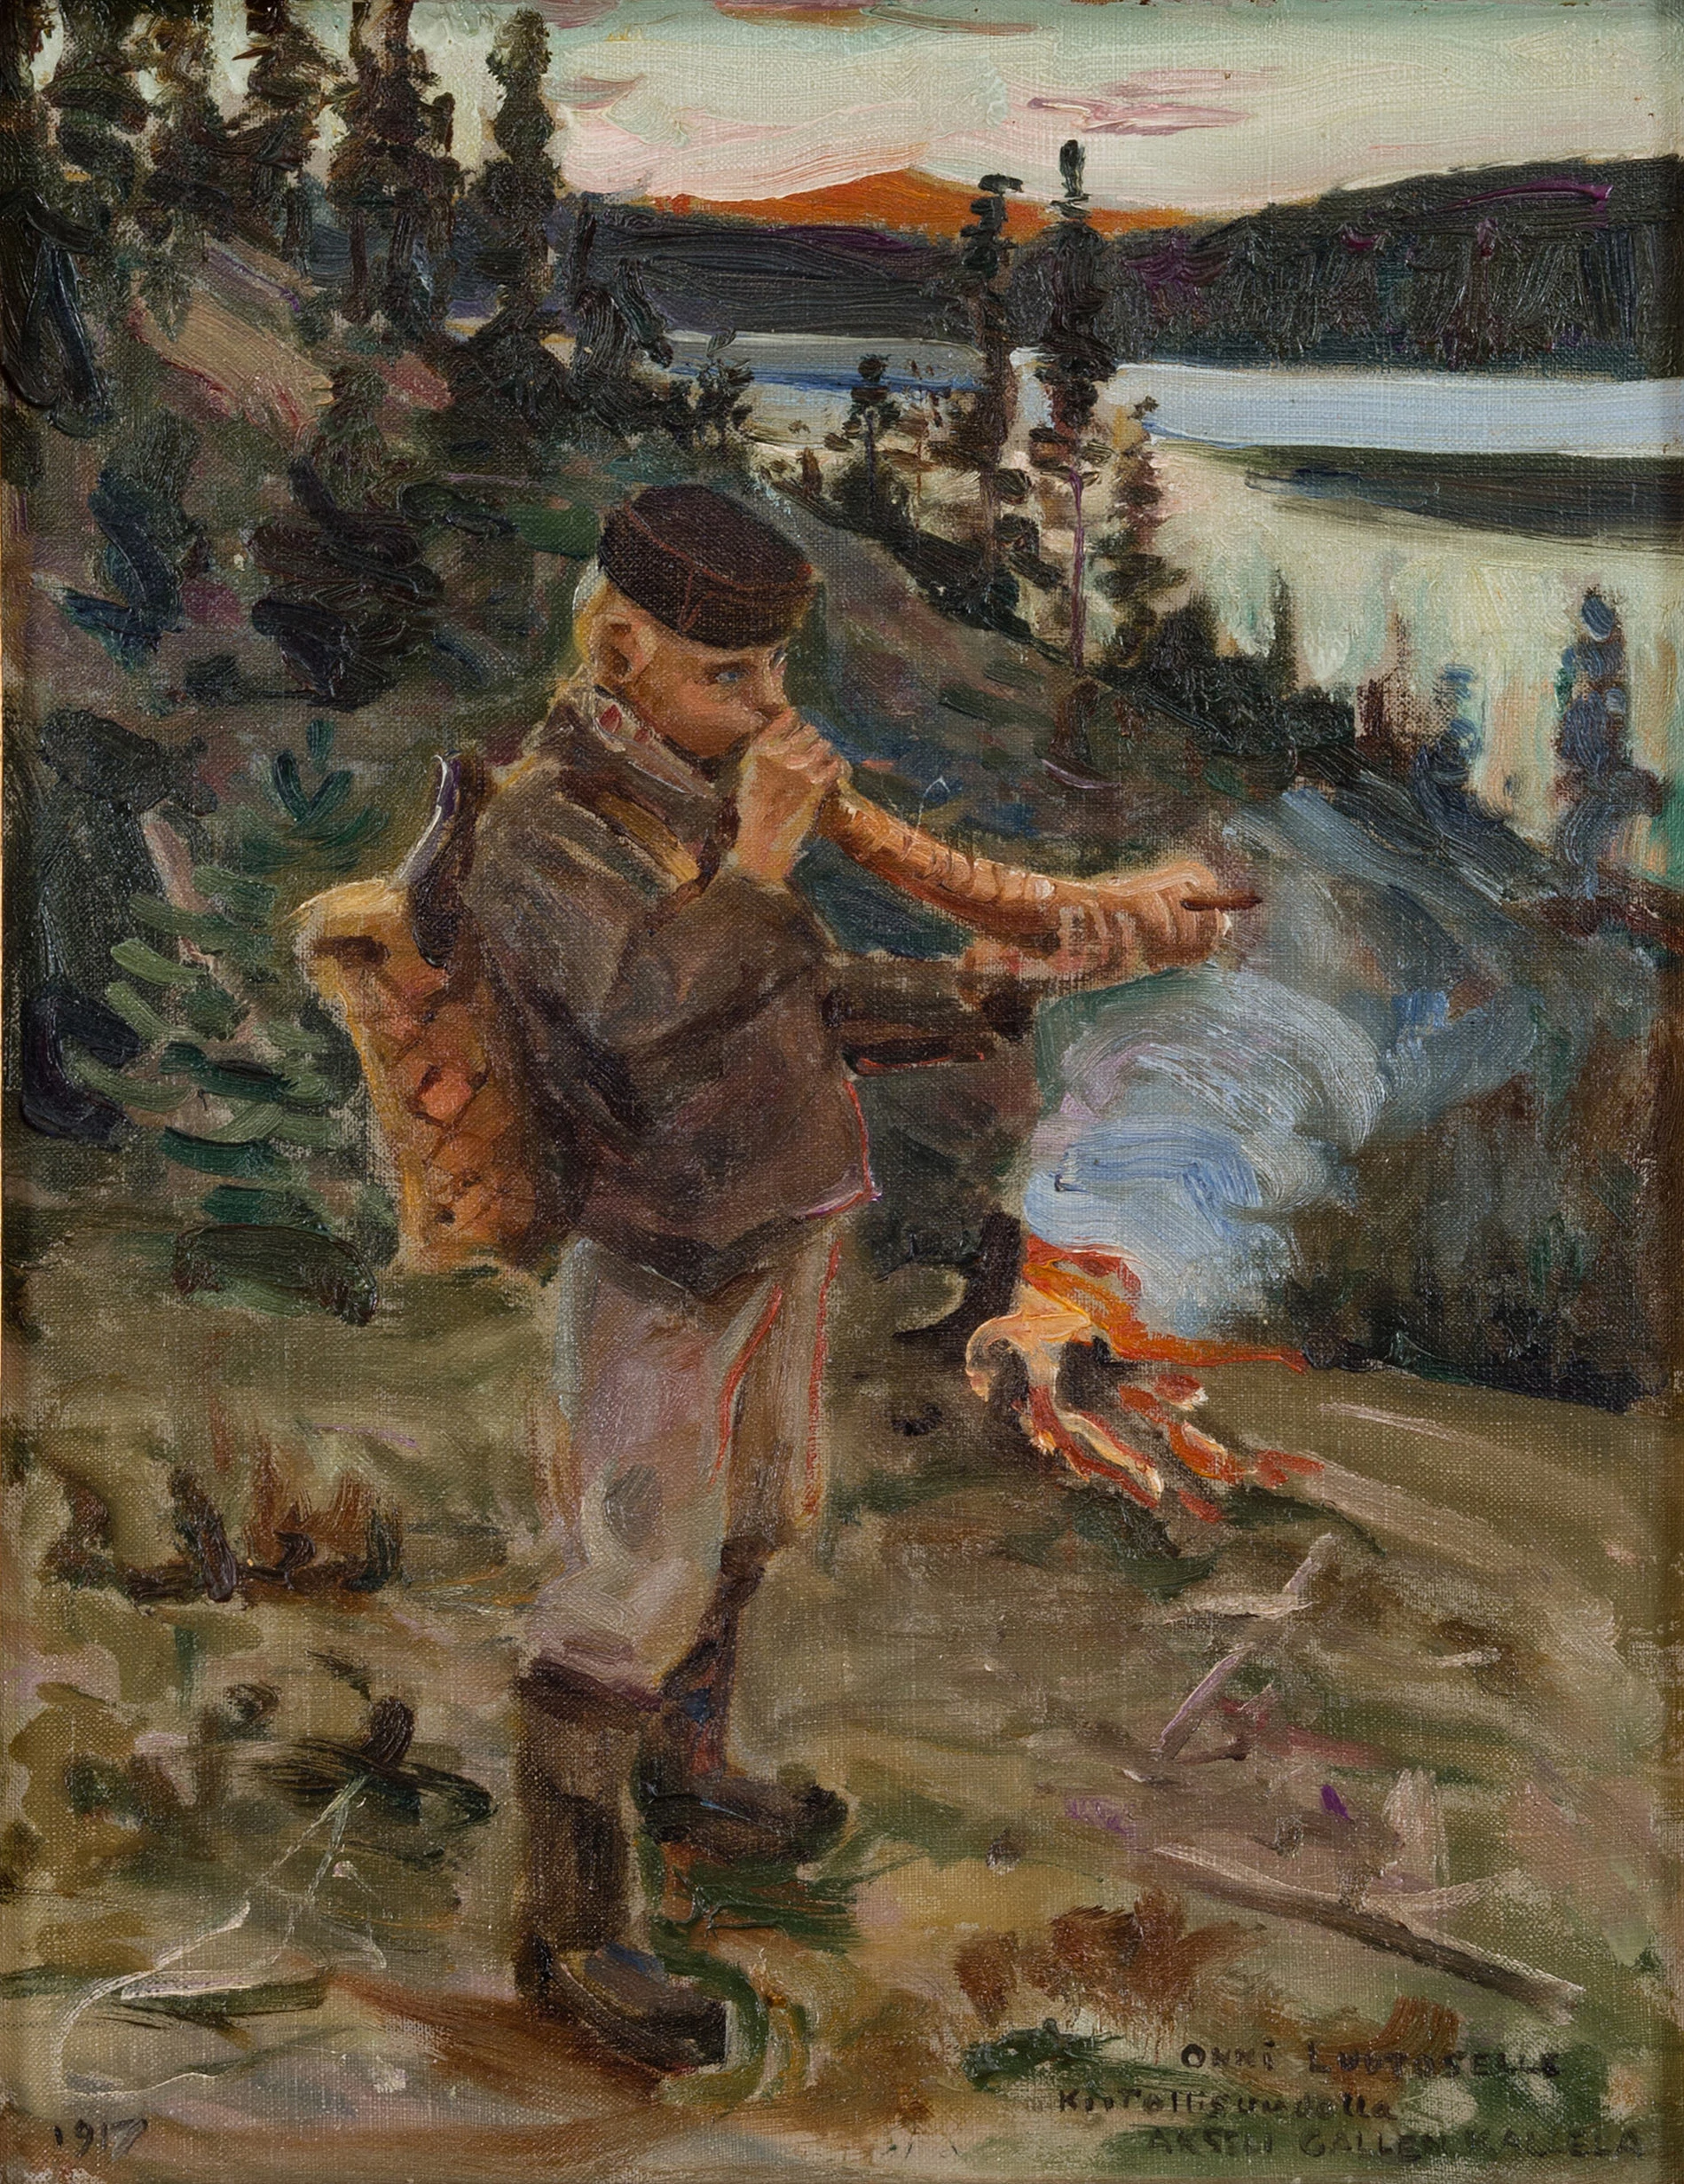 Shepherd boy from Paanajärvi, Akseli Gallen-Kallela